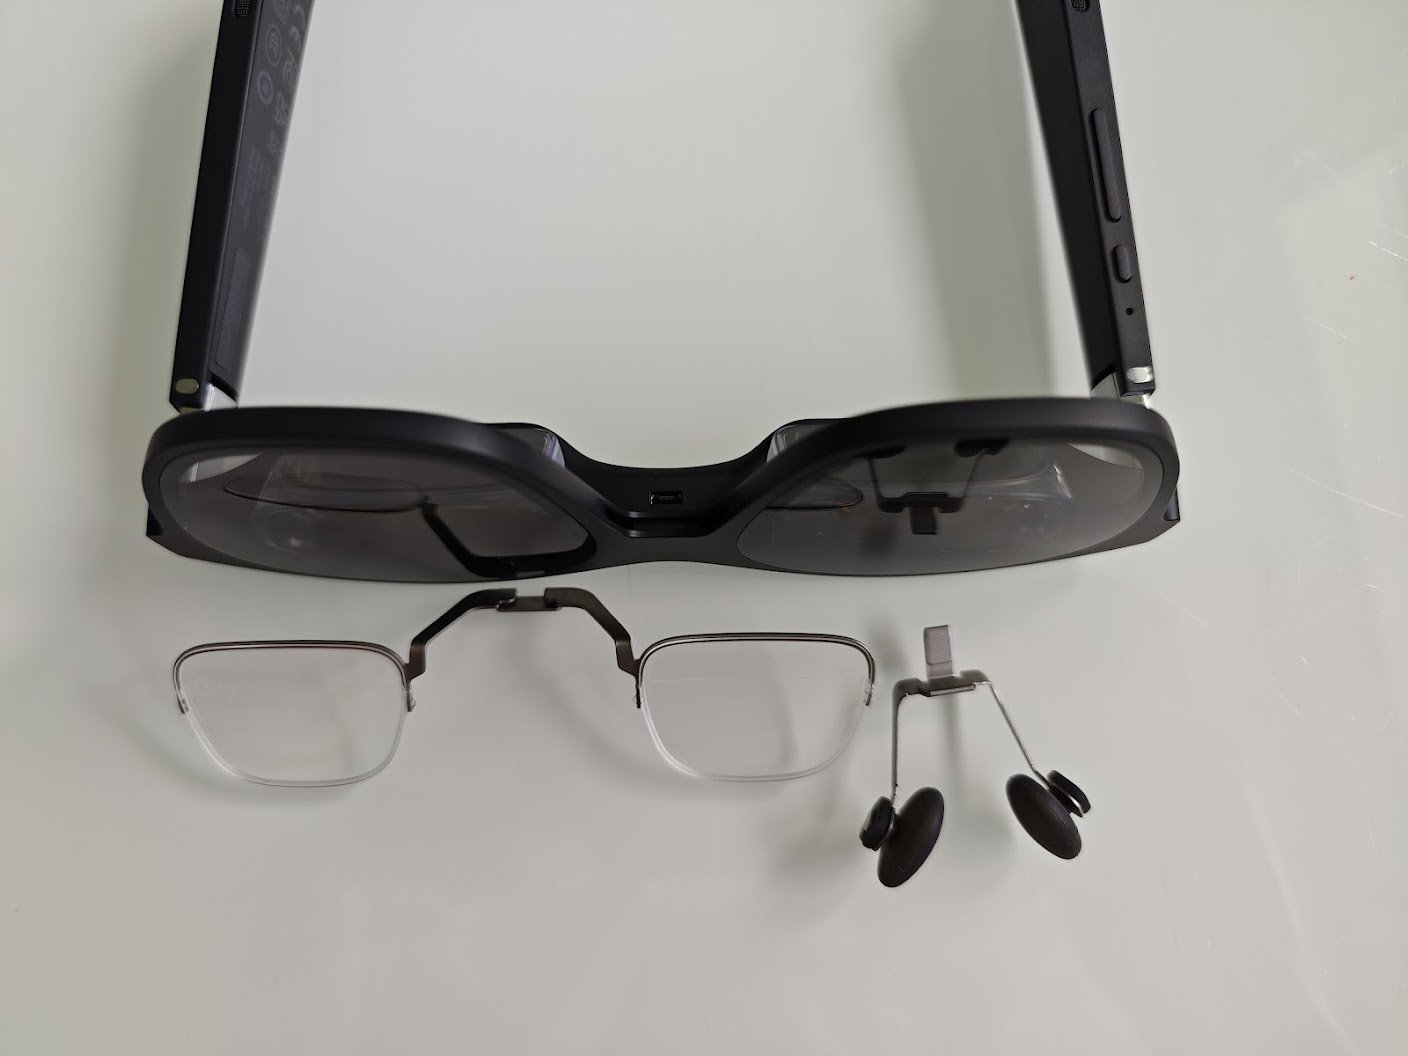 XReal Air display glasses - General Discussion - TabletPCReview Forum